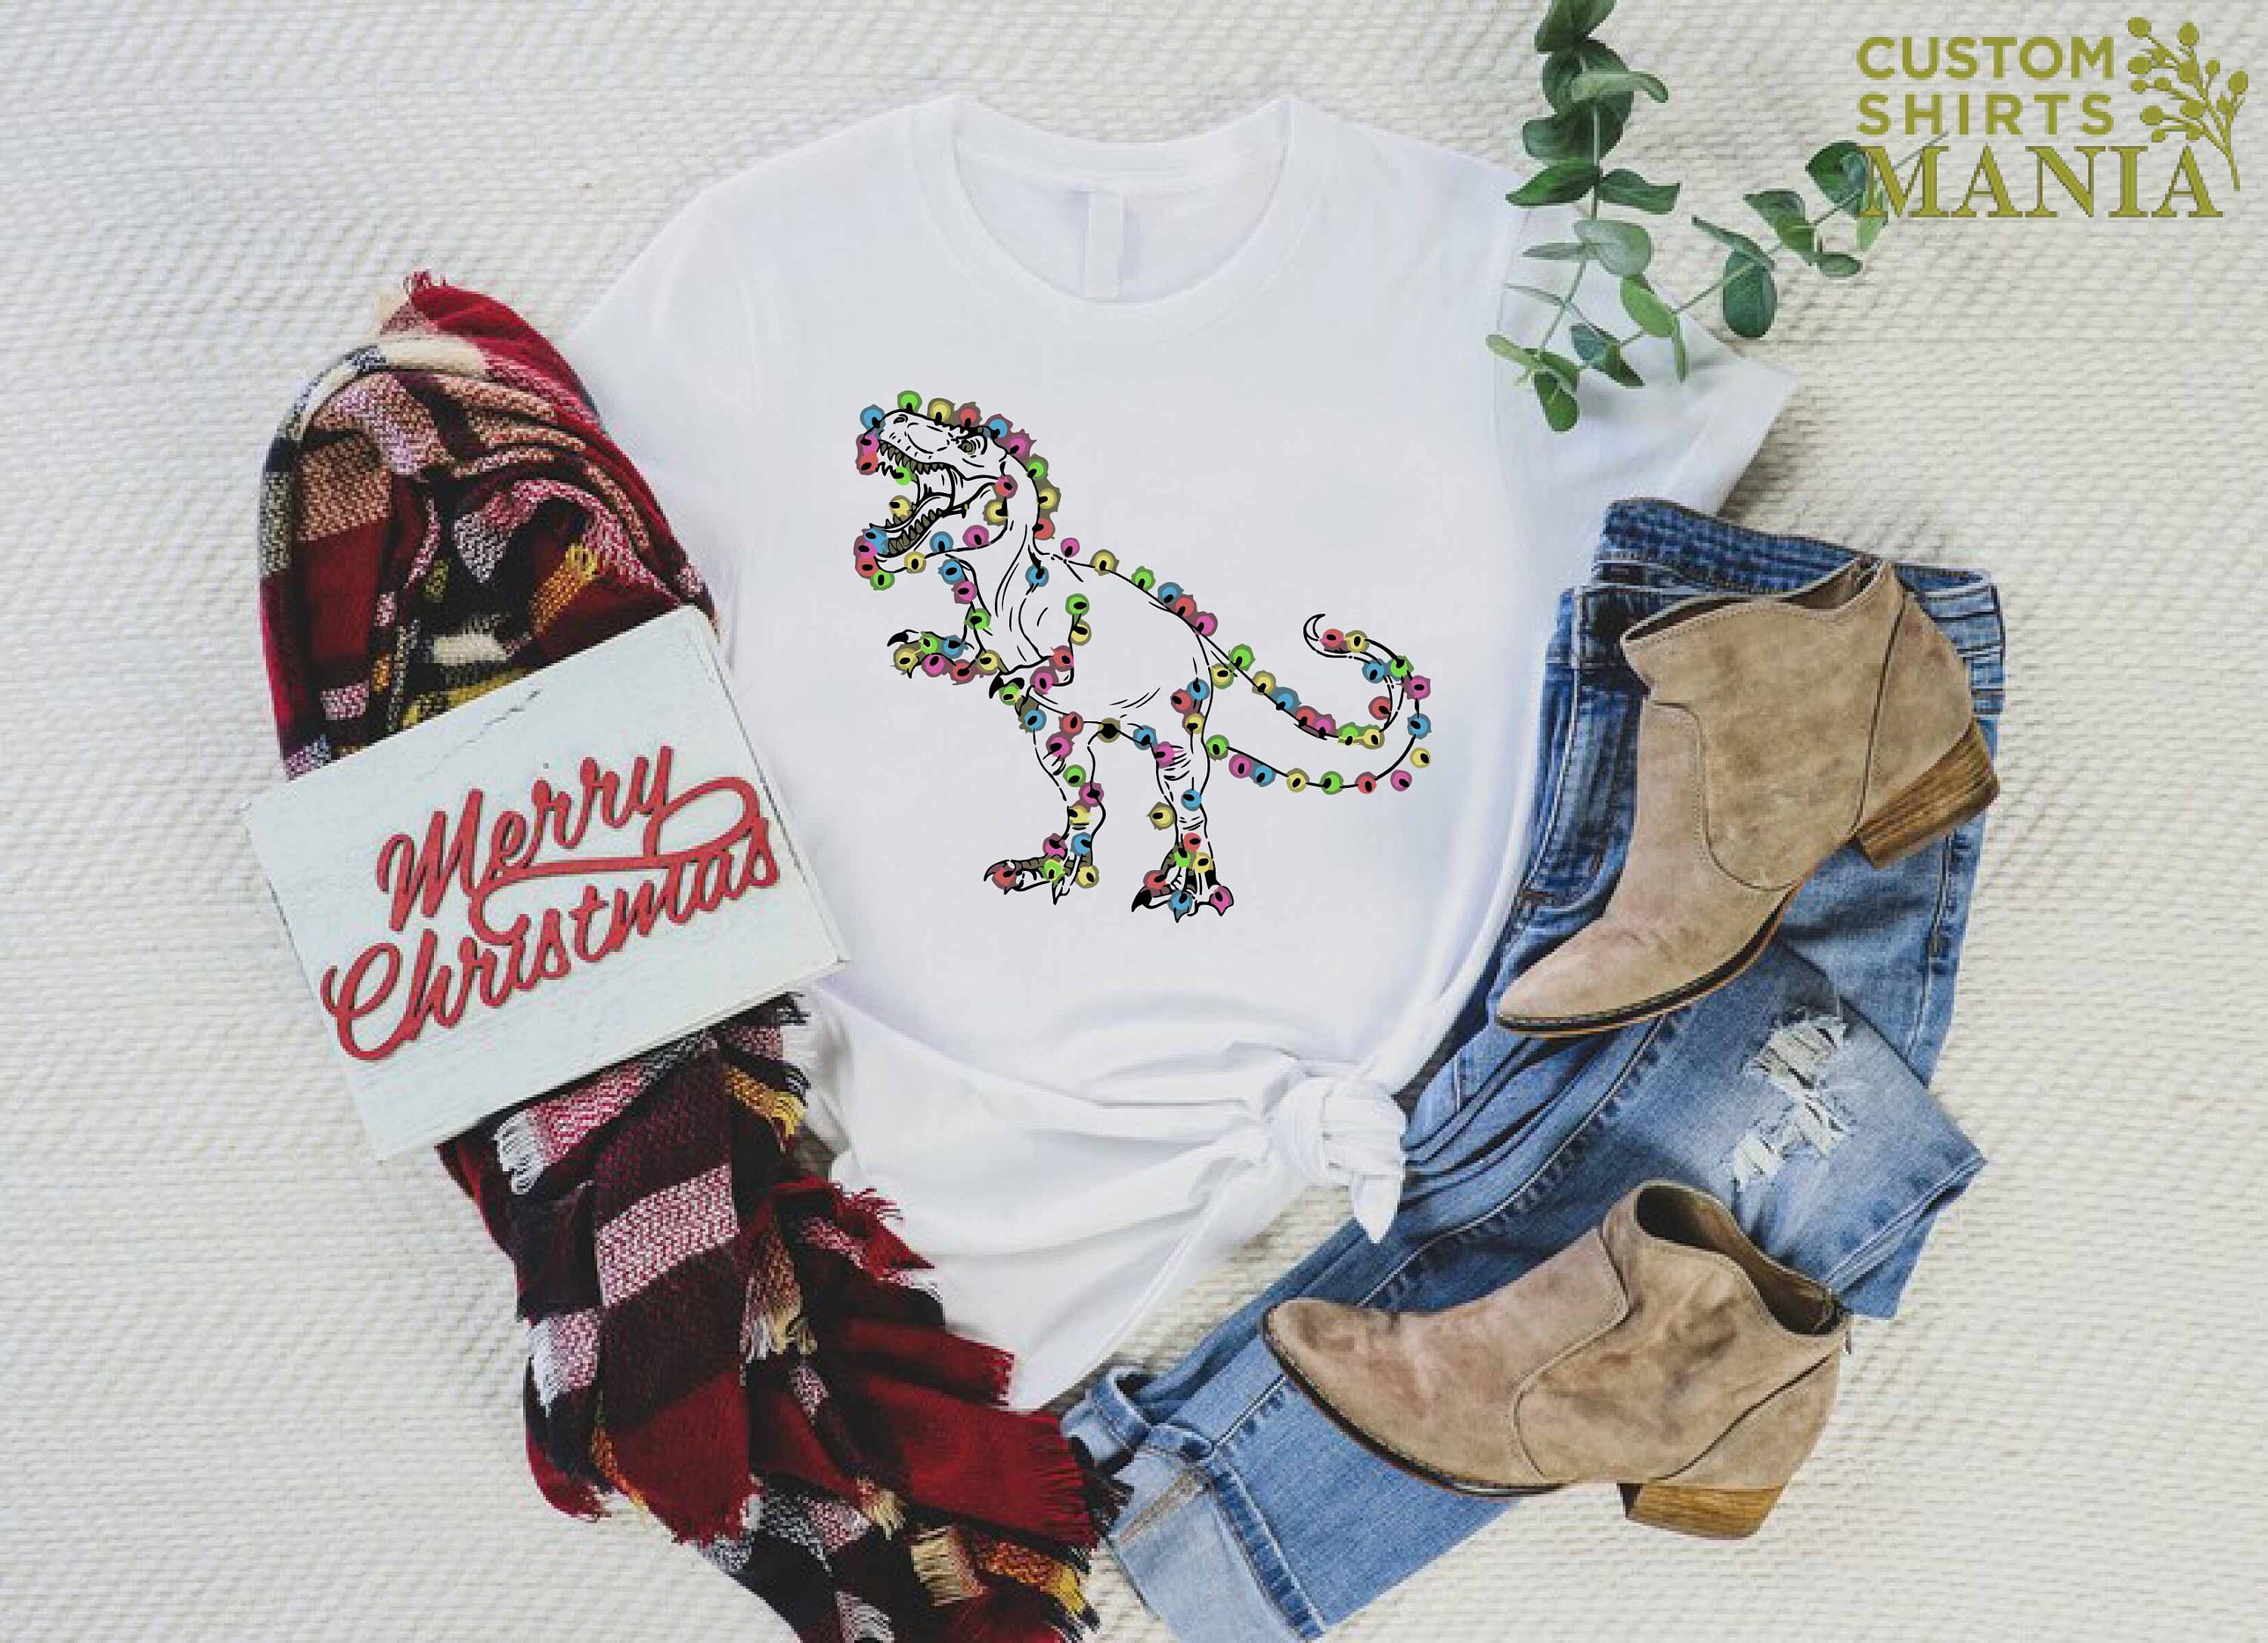 Discover Christmas Dinosaur Light Shirt, T-rex Christmas Shirt, Boys Christmas Outfit, Xmas Holiday Shirt, Tree Rex Shirt, Kids Christmas Shirt